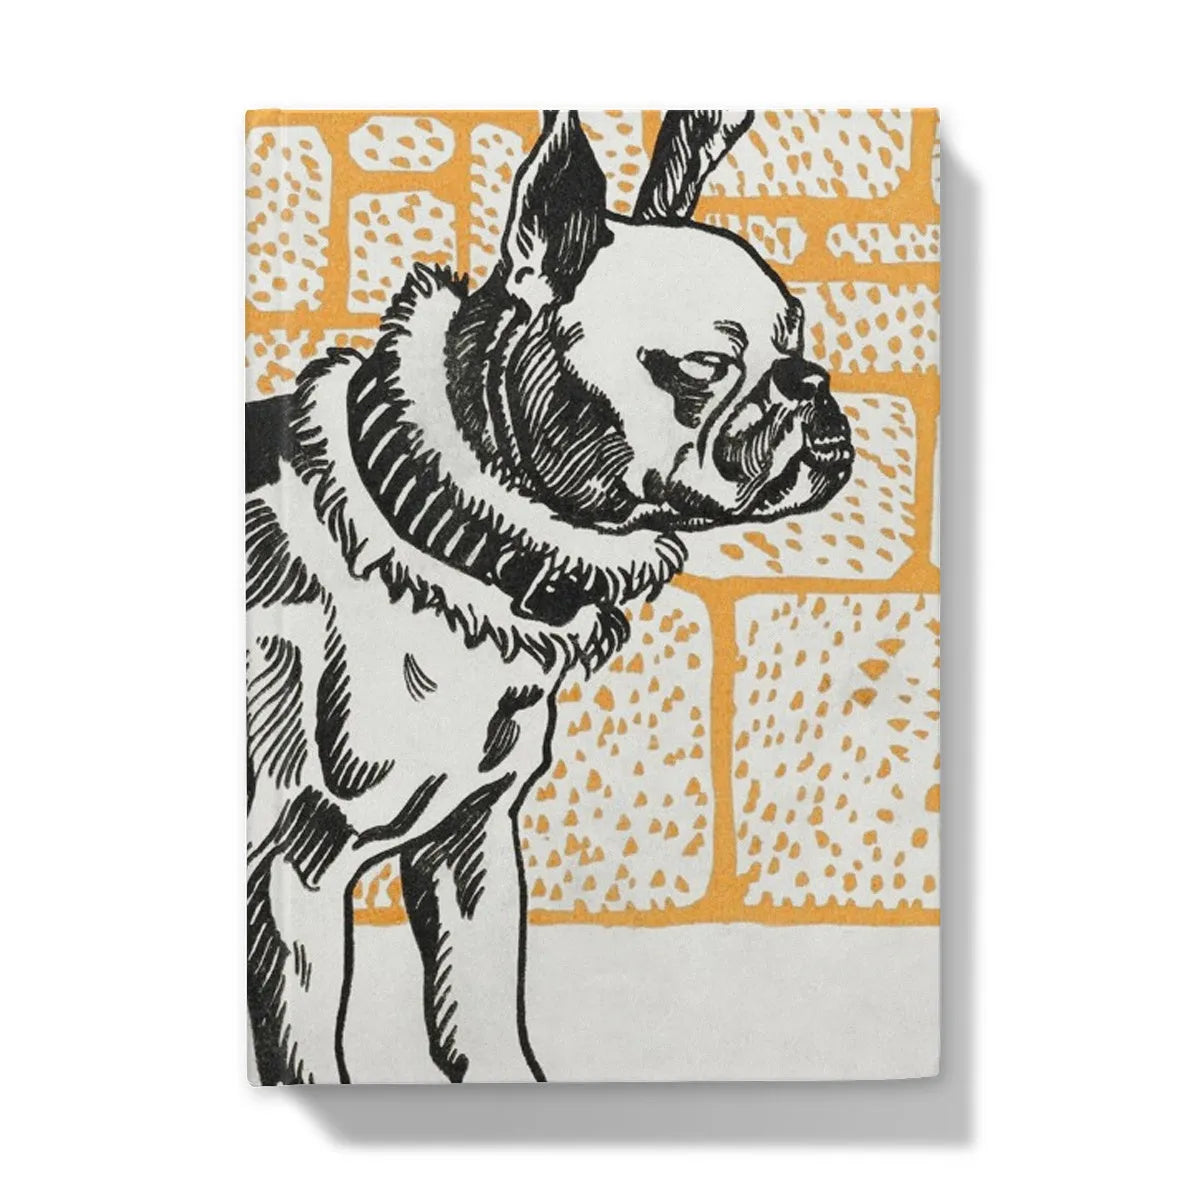 Pitbull Terrier By Moriz Jung Hardback Journal - 5’x7’ / Lined - Notebooks & Notepads - Aesthetic Art